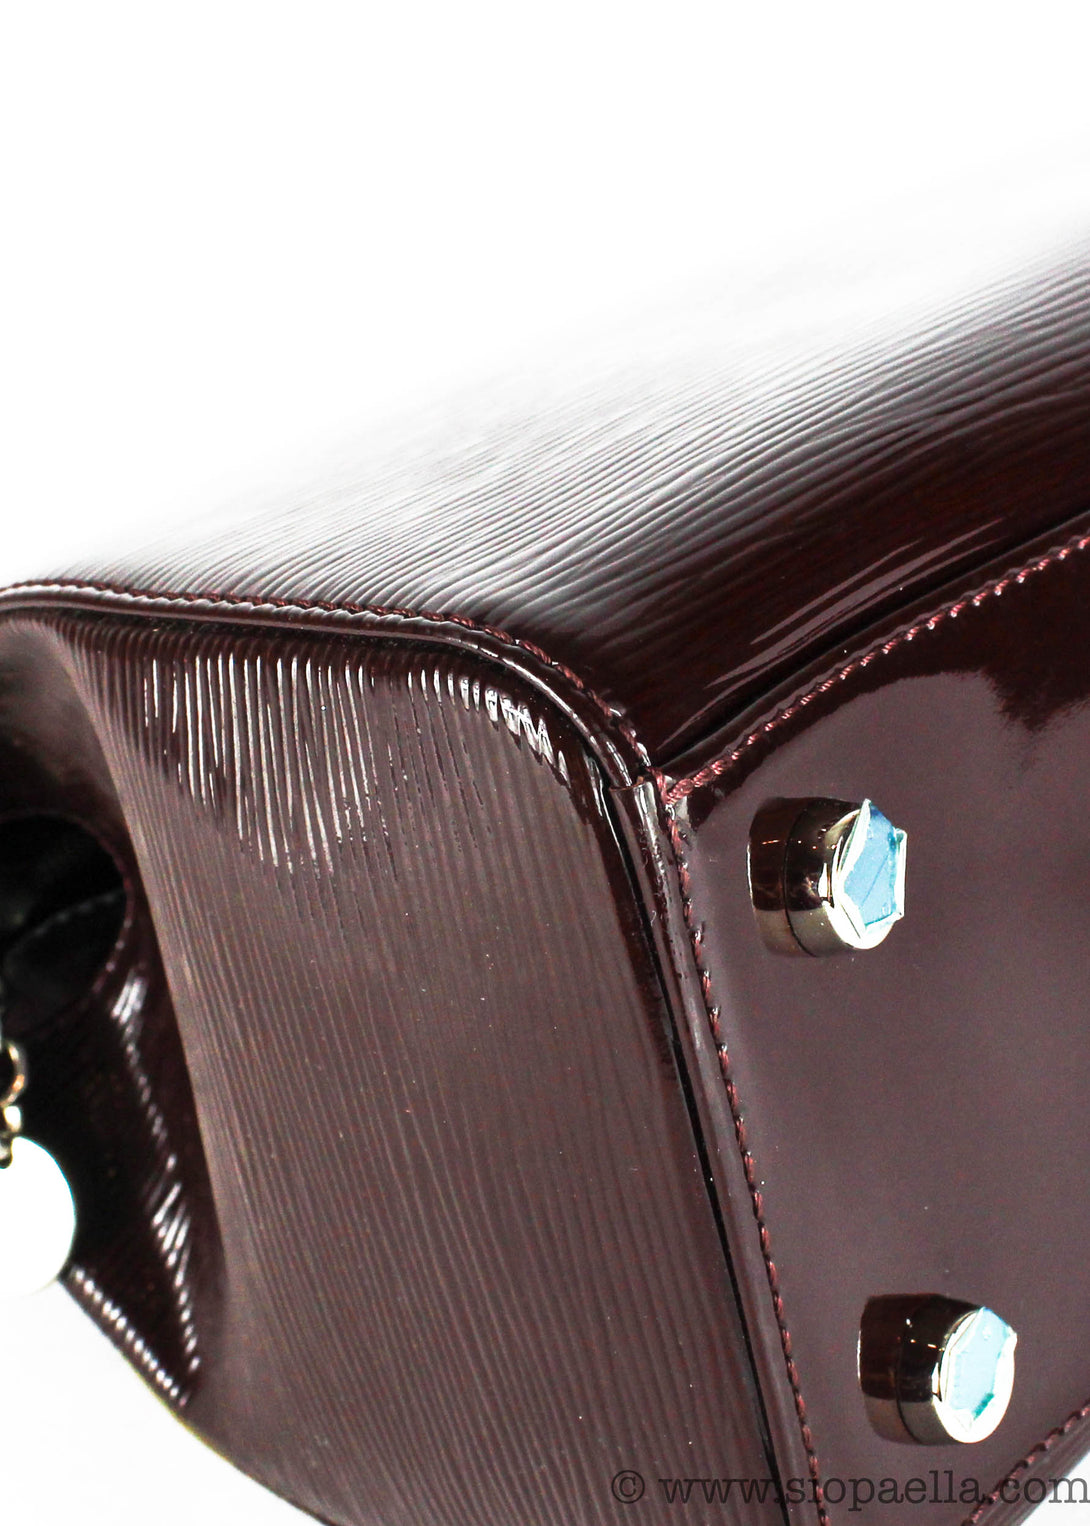 Louis Vuitton Wine Epi Leather Brea Handbag - Siopaella Designer Exchange